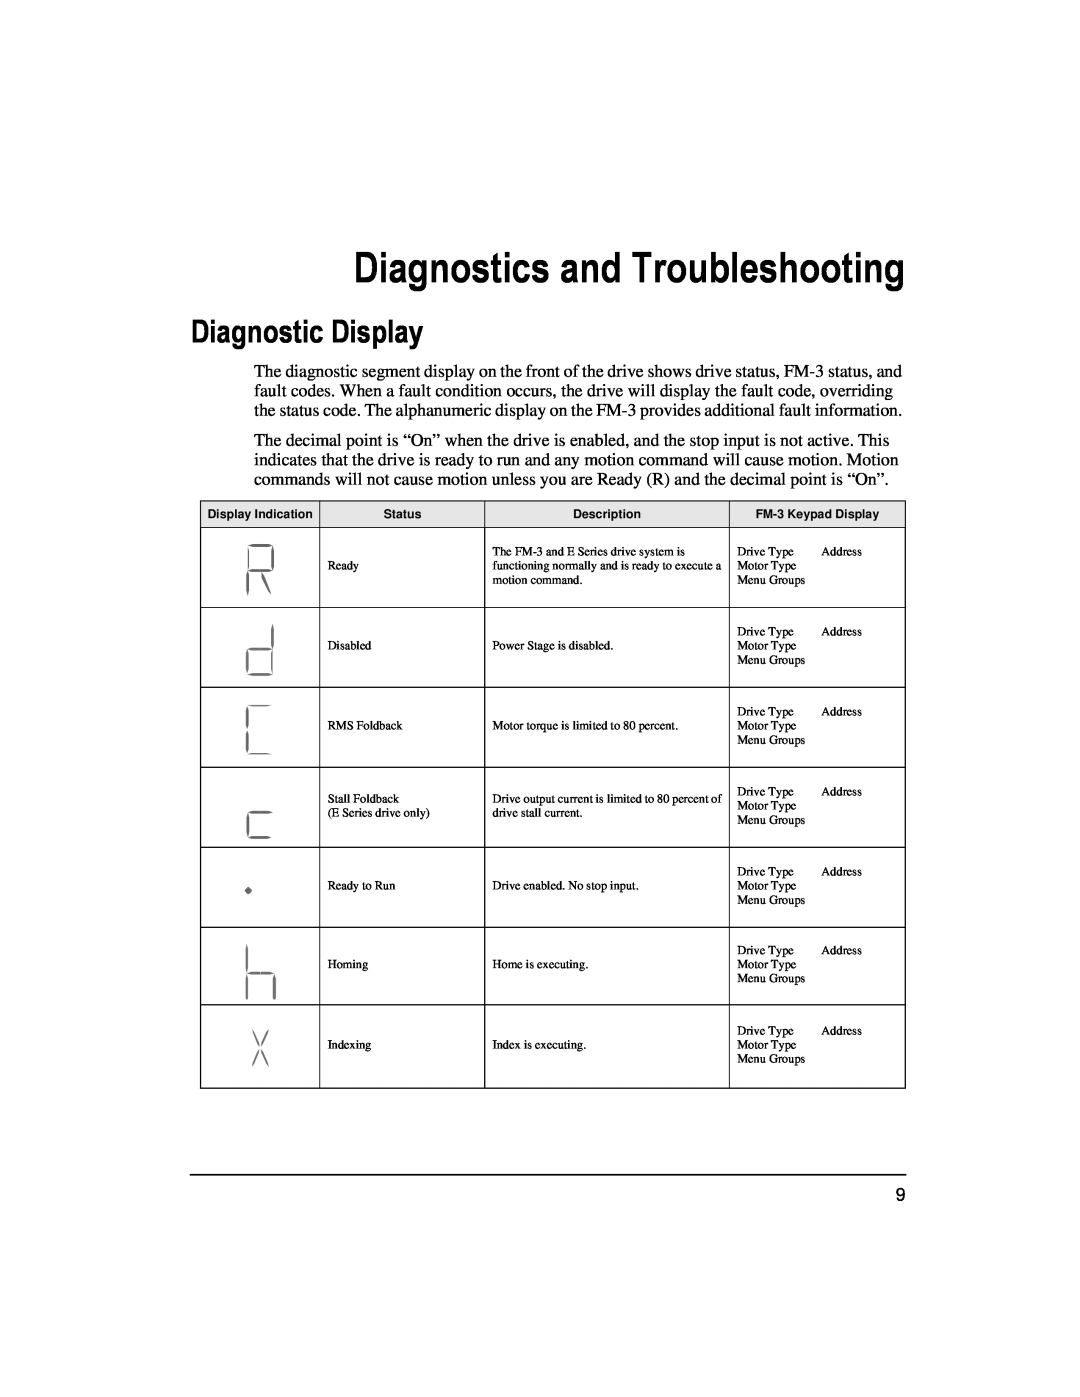 Emerson 400508-02 Diagnostics and Troubleshooting, Diagnostic Display, Display Indication, Status, Description 